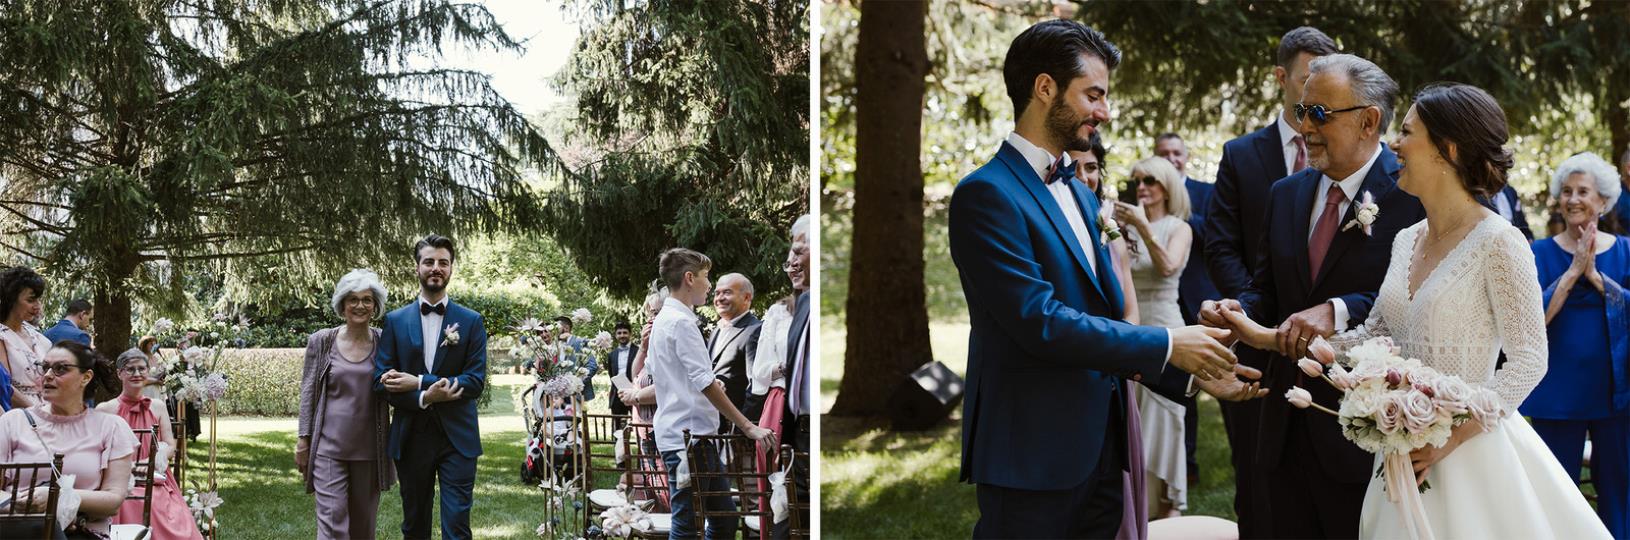 bride and groom walk down the aisle | Laura Stramacchia | Wedding Photography